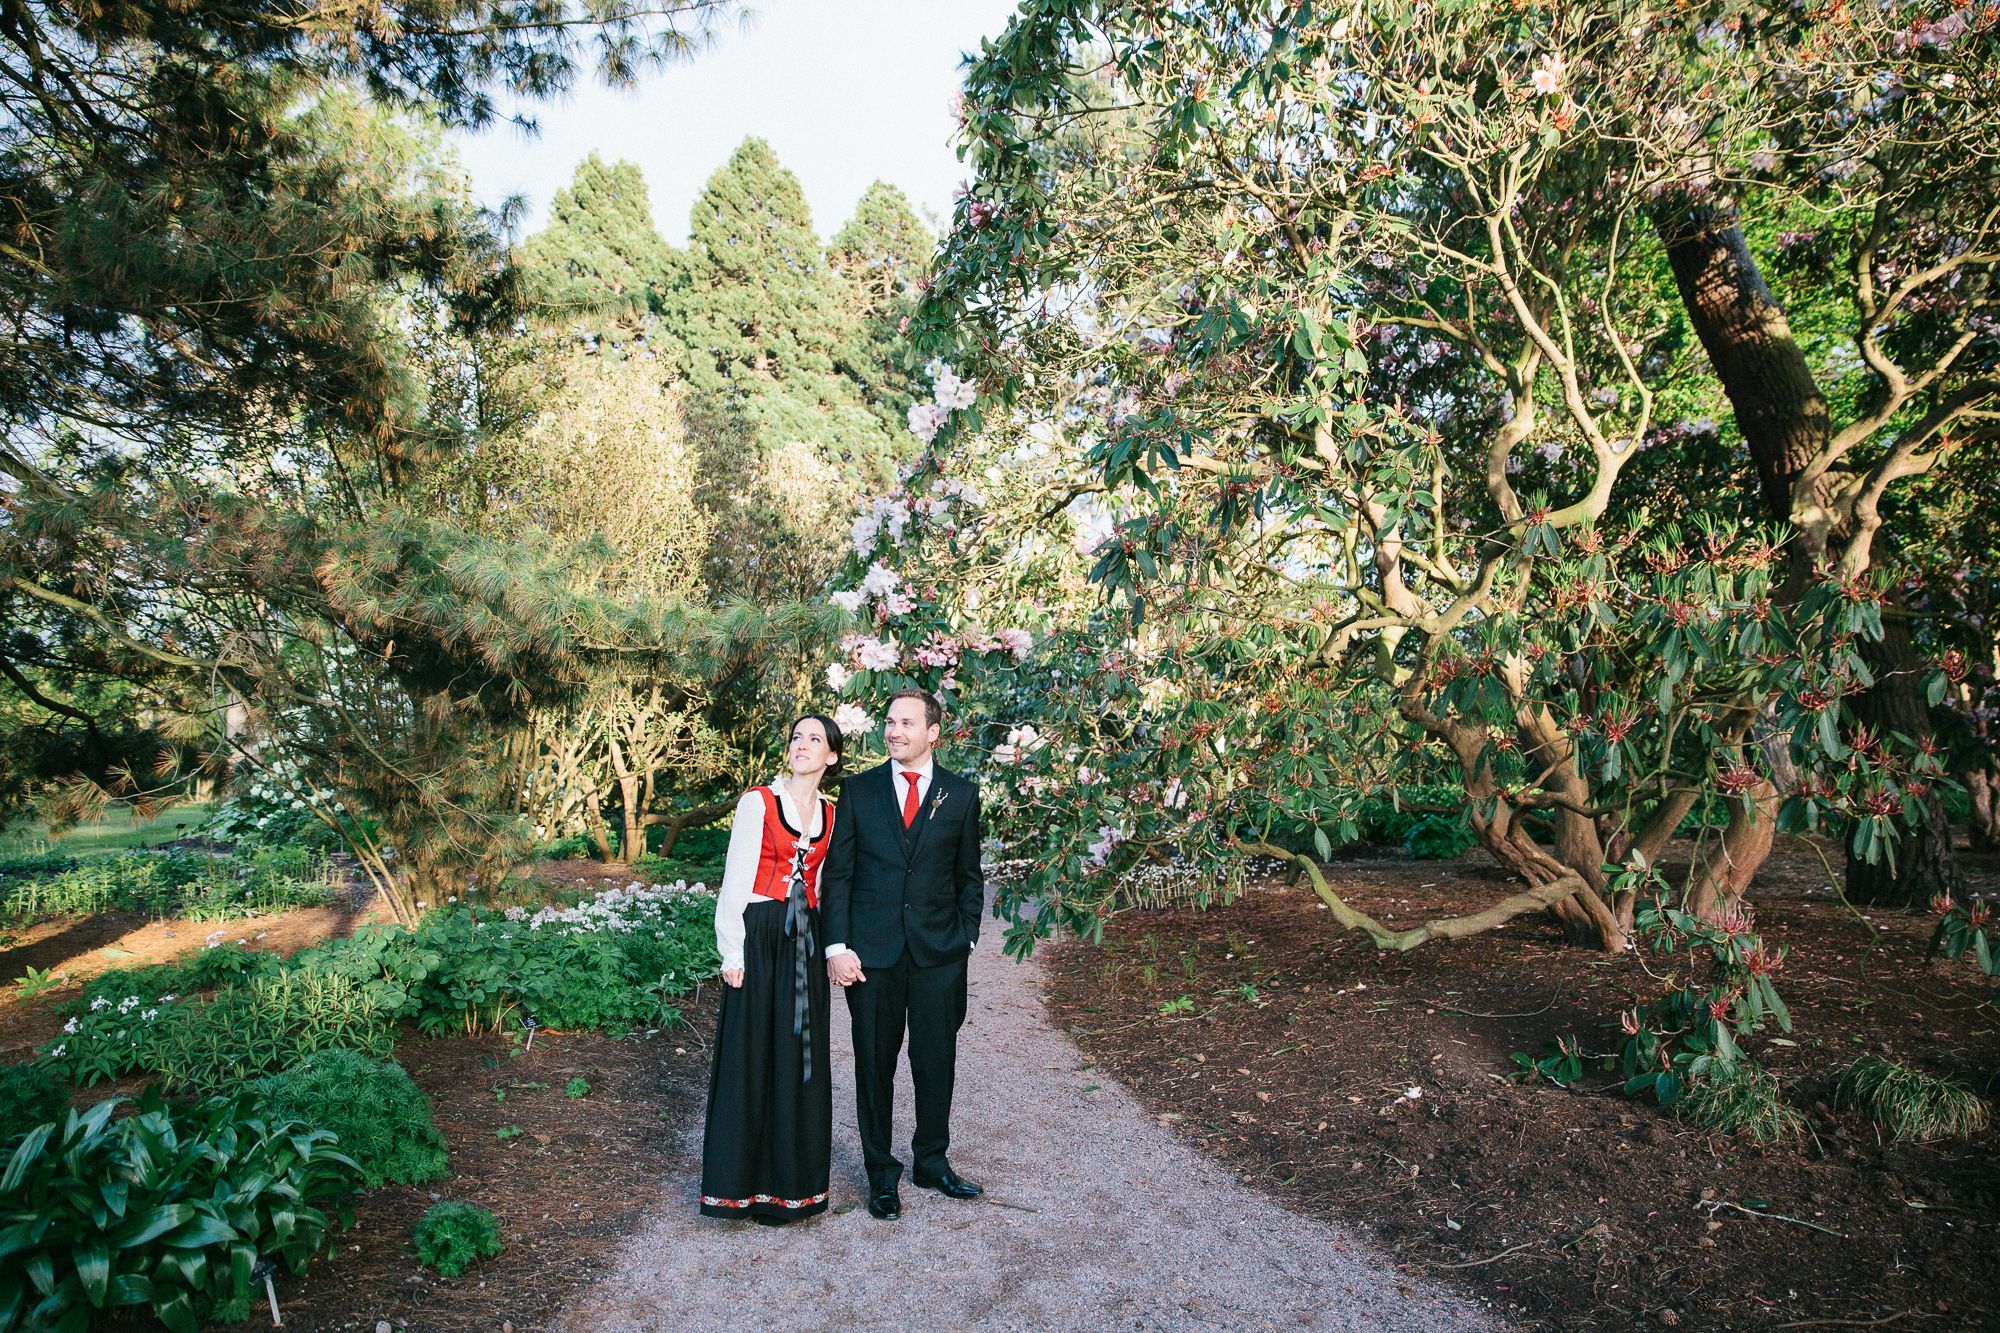 Weddings at the Royal Botanic Garden Edinburgh